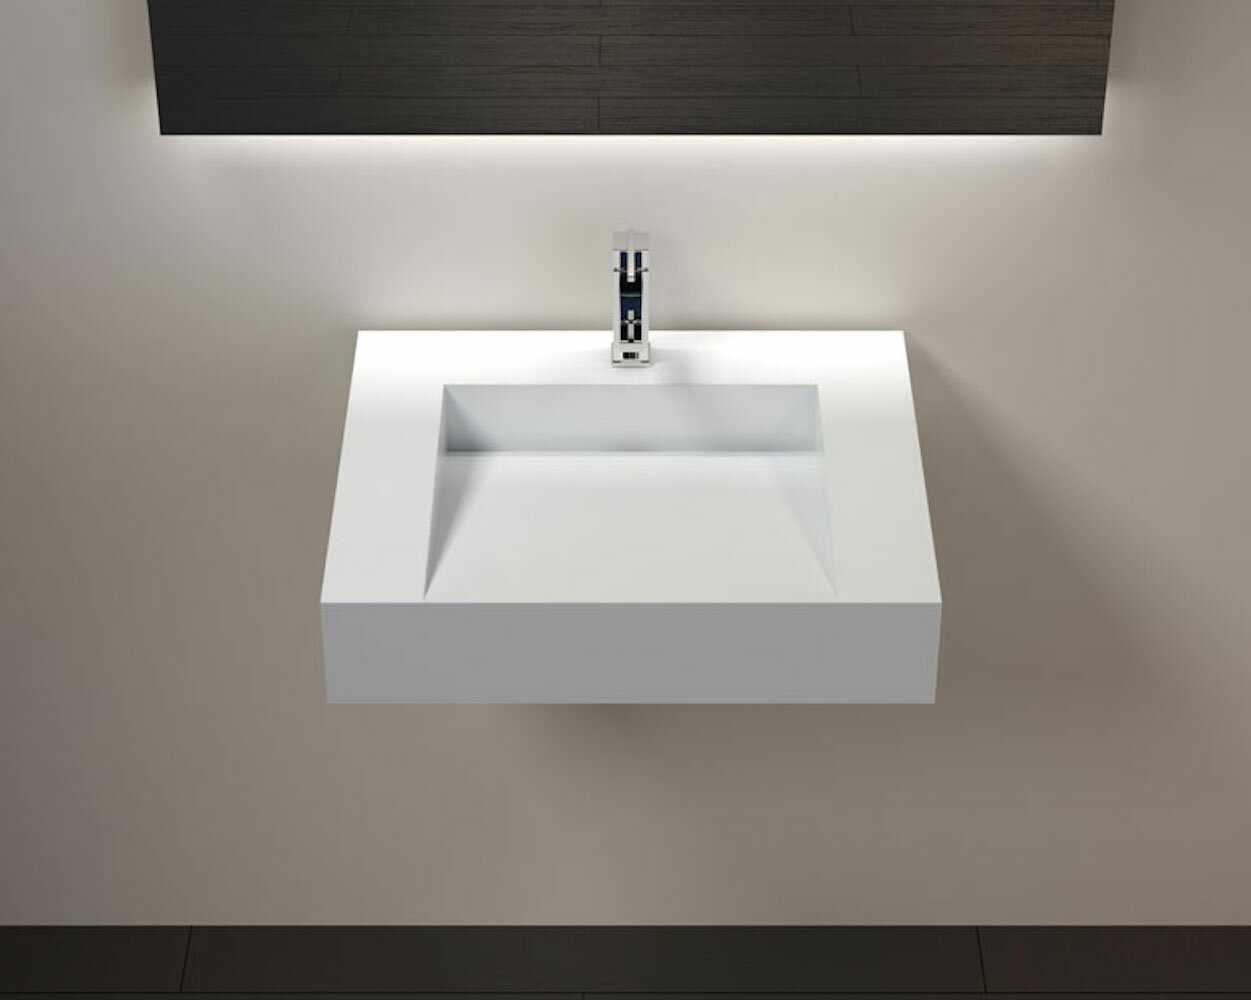 Badeloft Polymarble Square Wall Mount Bathroom Sink Reviews Wayfair